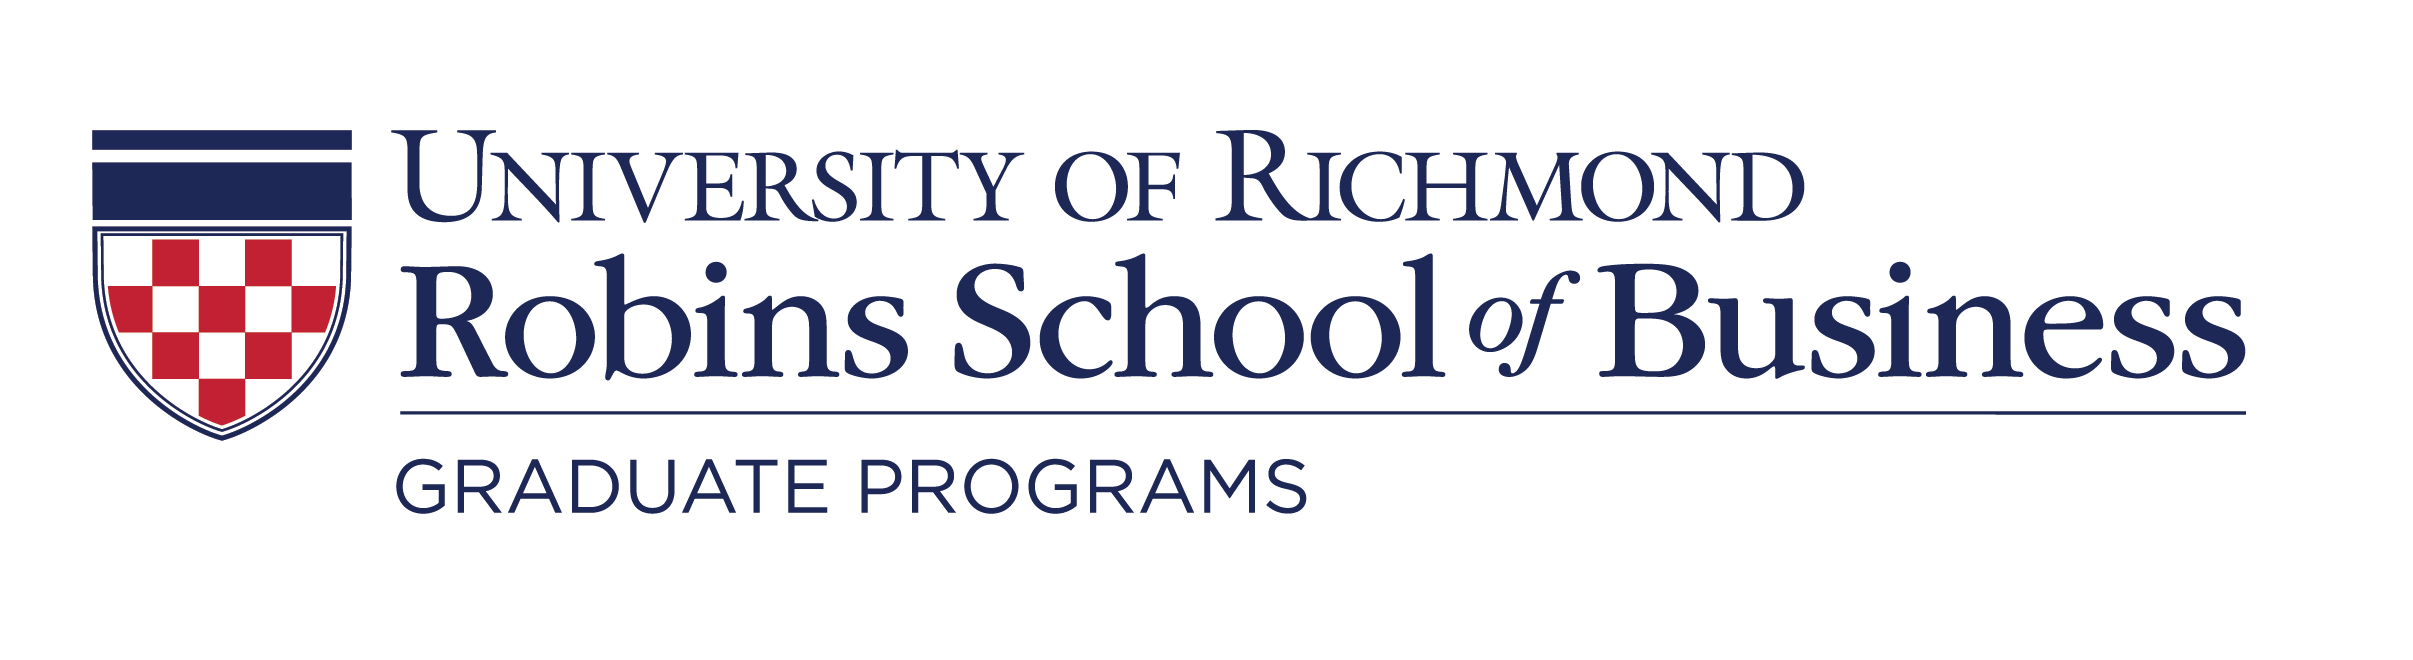 University of Richmond Robins School of Business